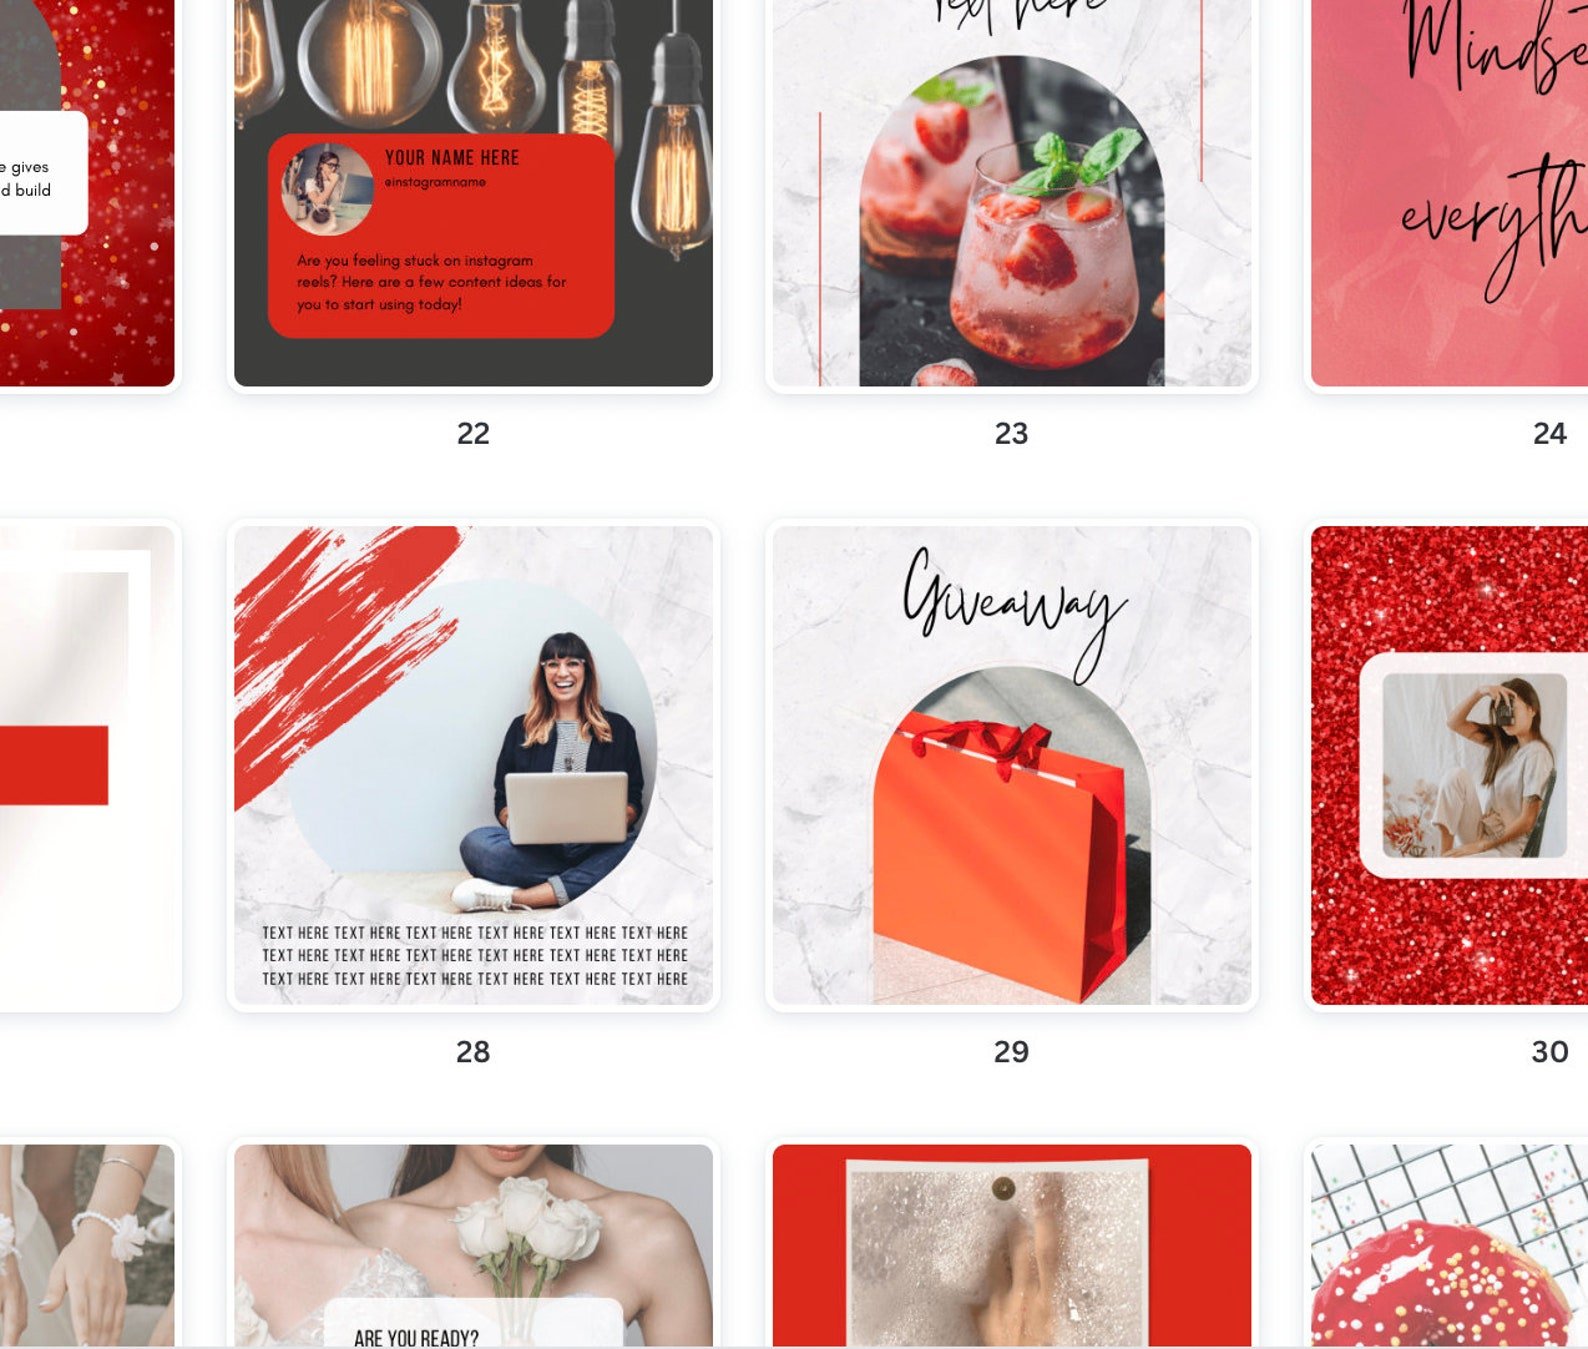 Canva Luxury Social Media Templates | Instagram | Pinterest | Red modern templates | Fully editable | 50 templates